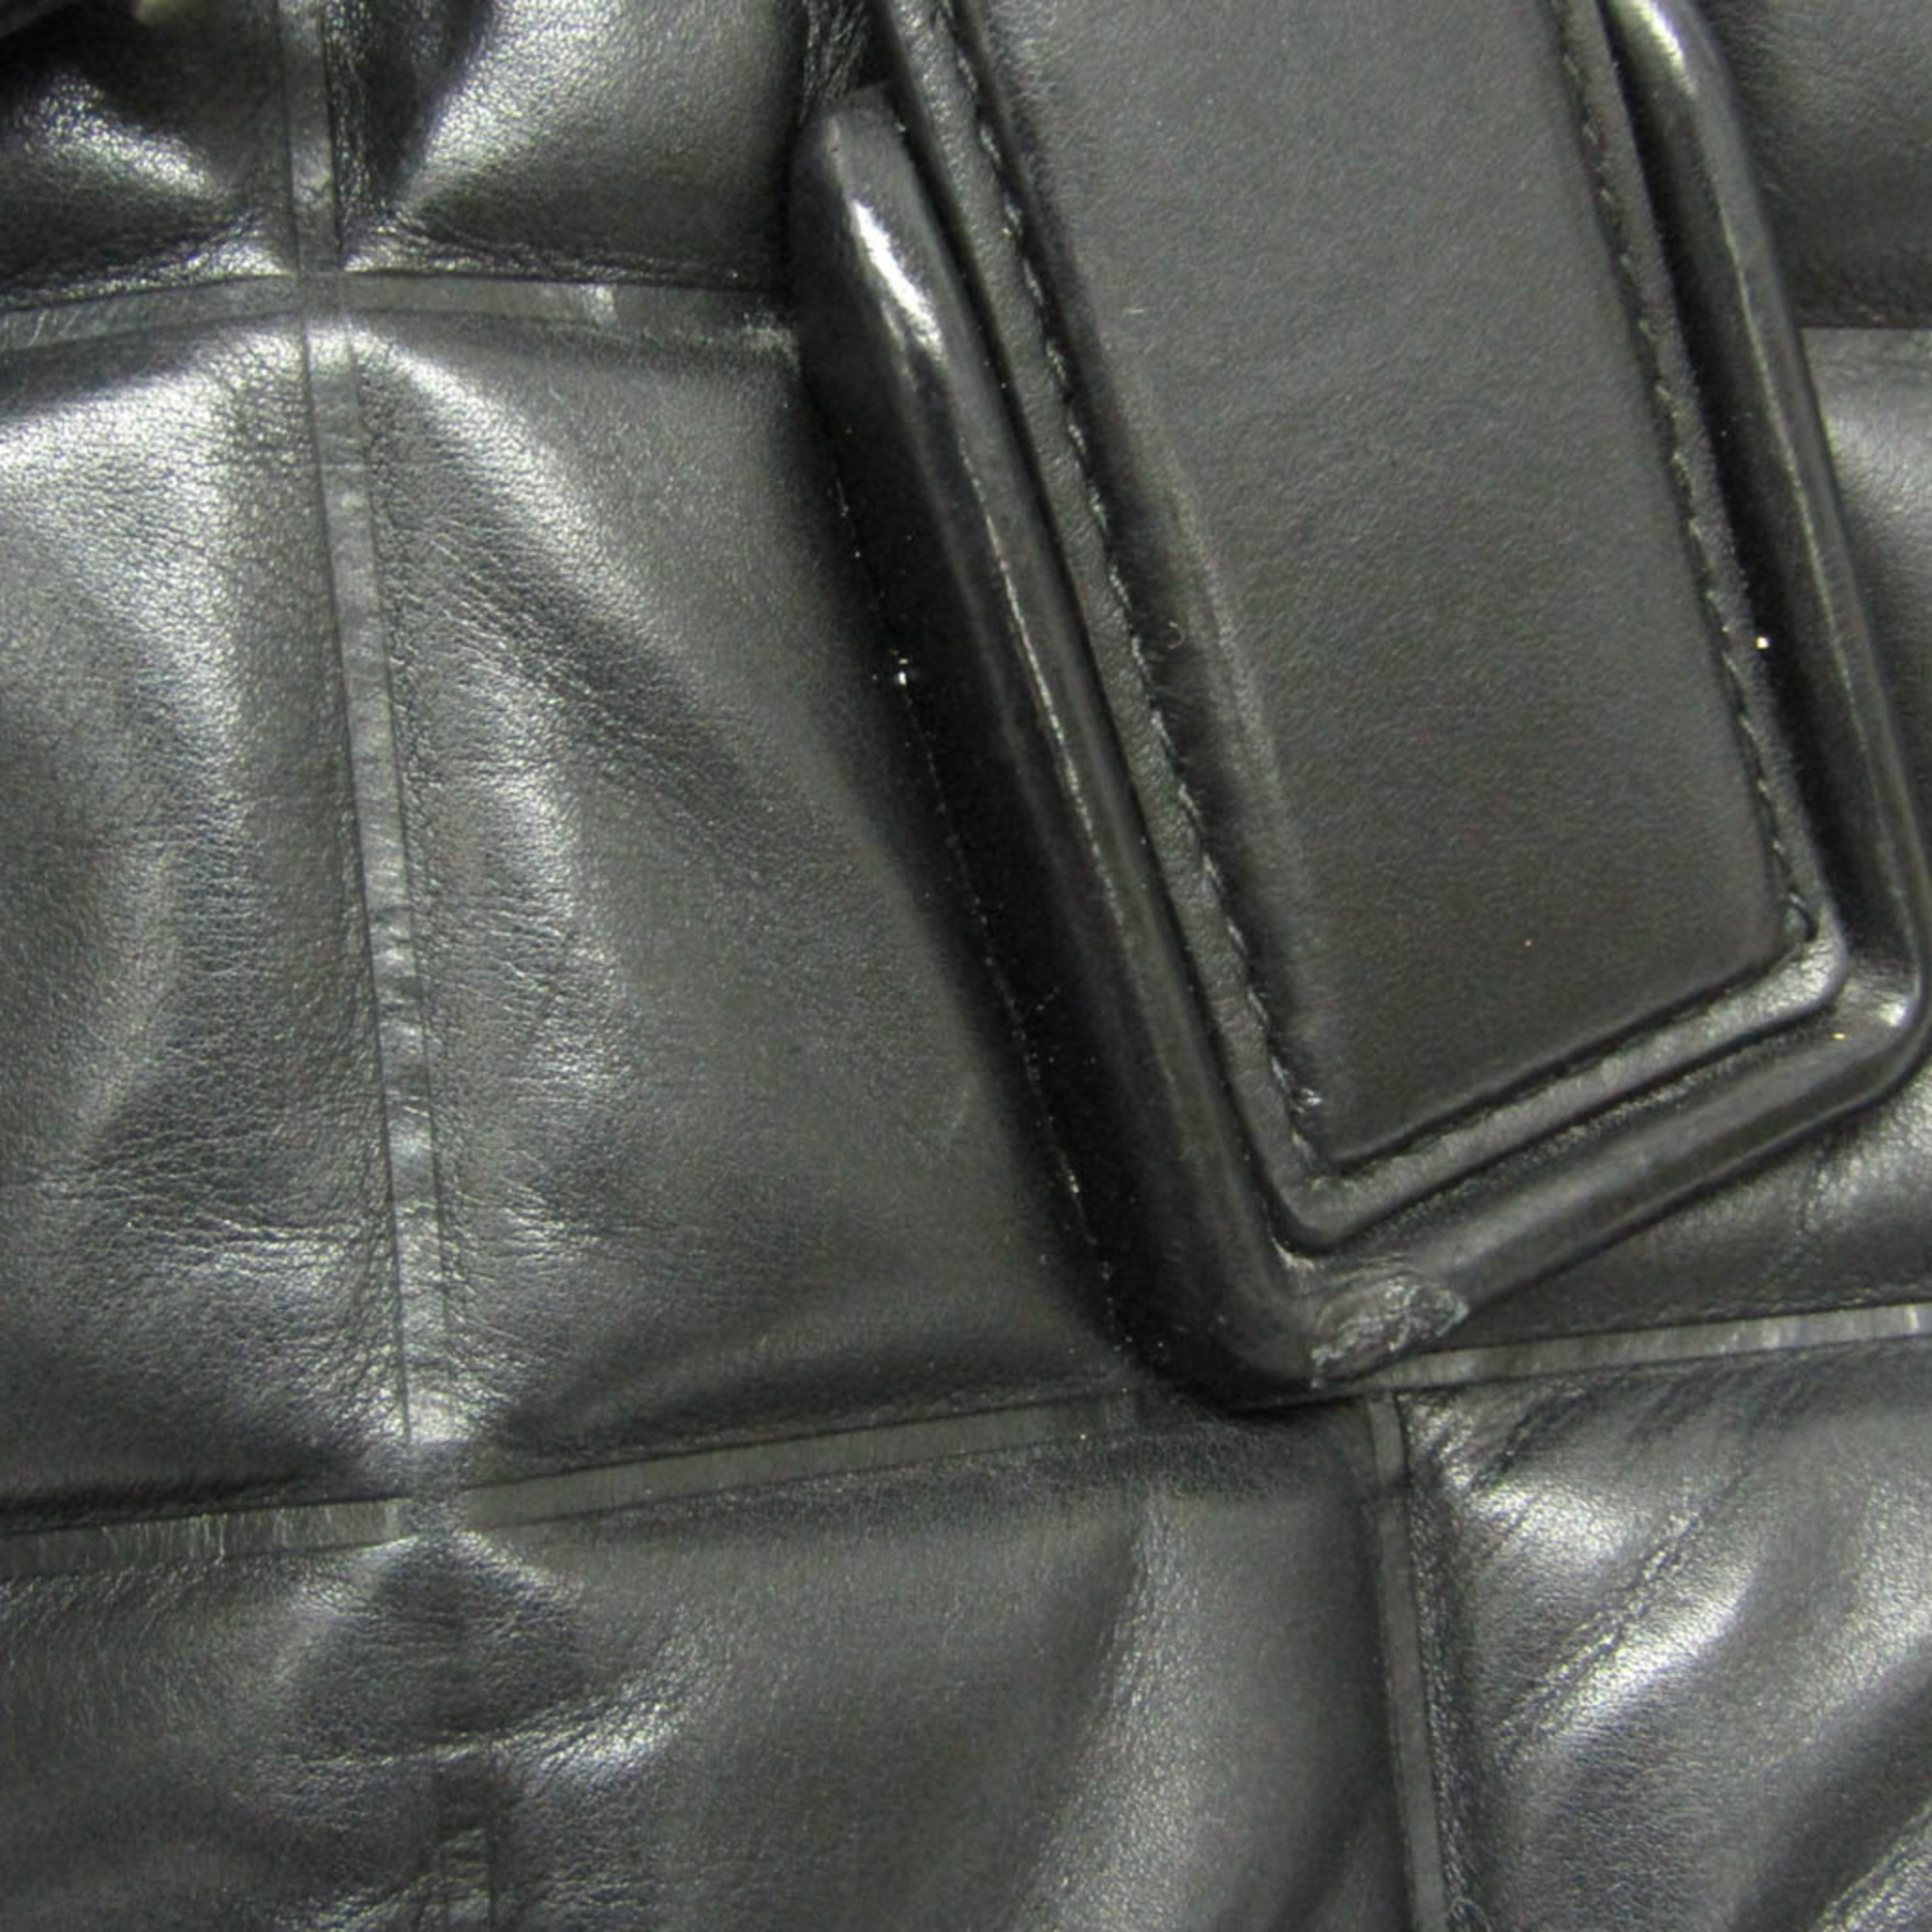 Bottega Veneta BV SWOOP Women's Leather Handbag,Shoulder Bag Black